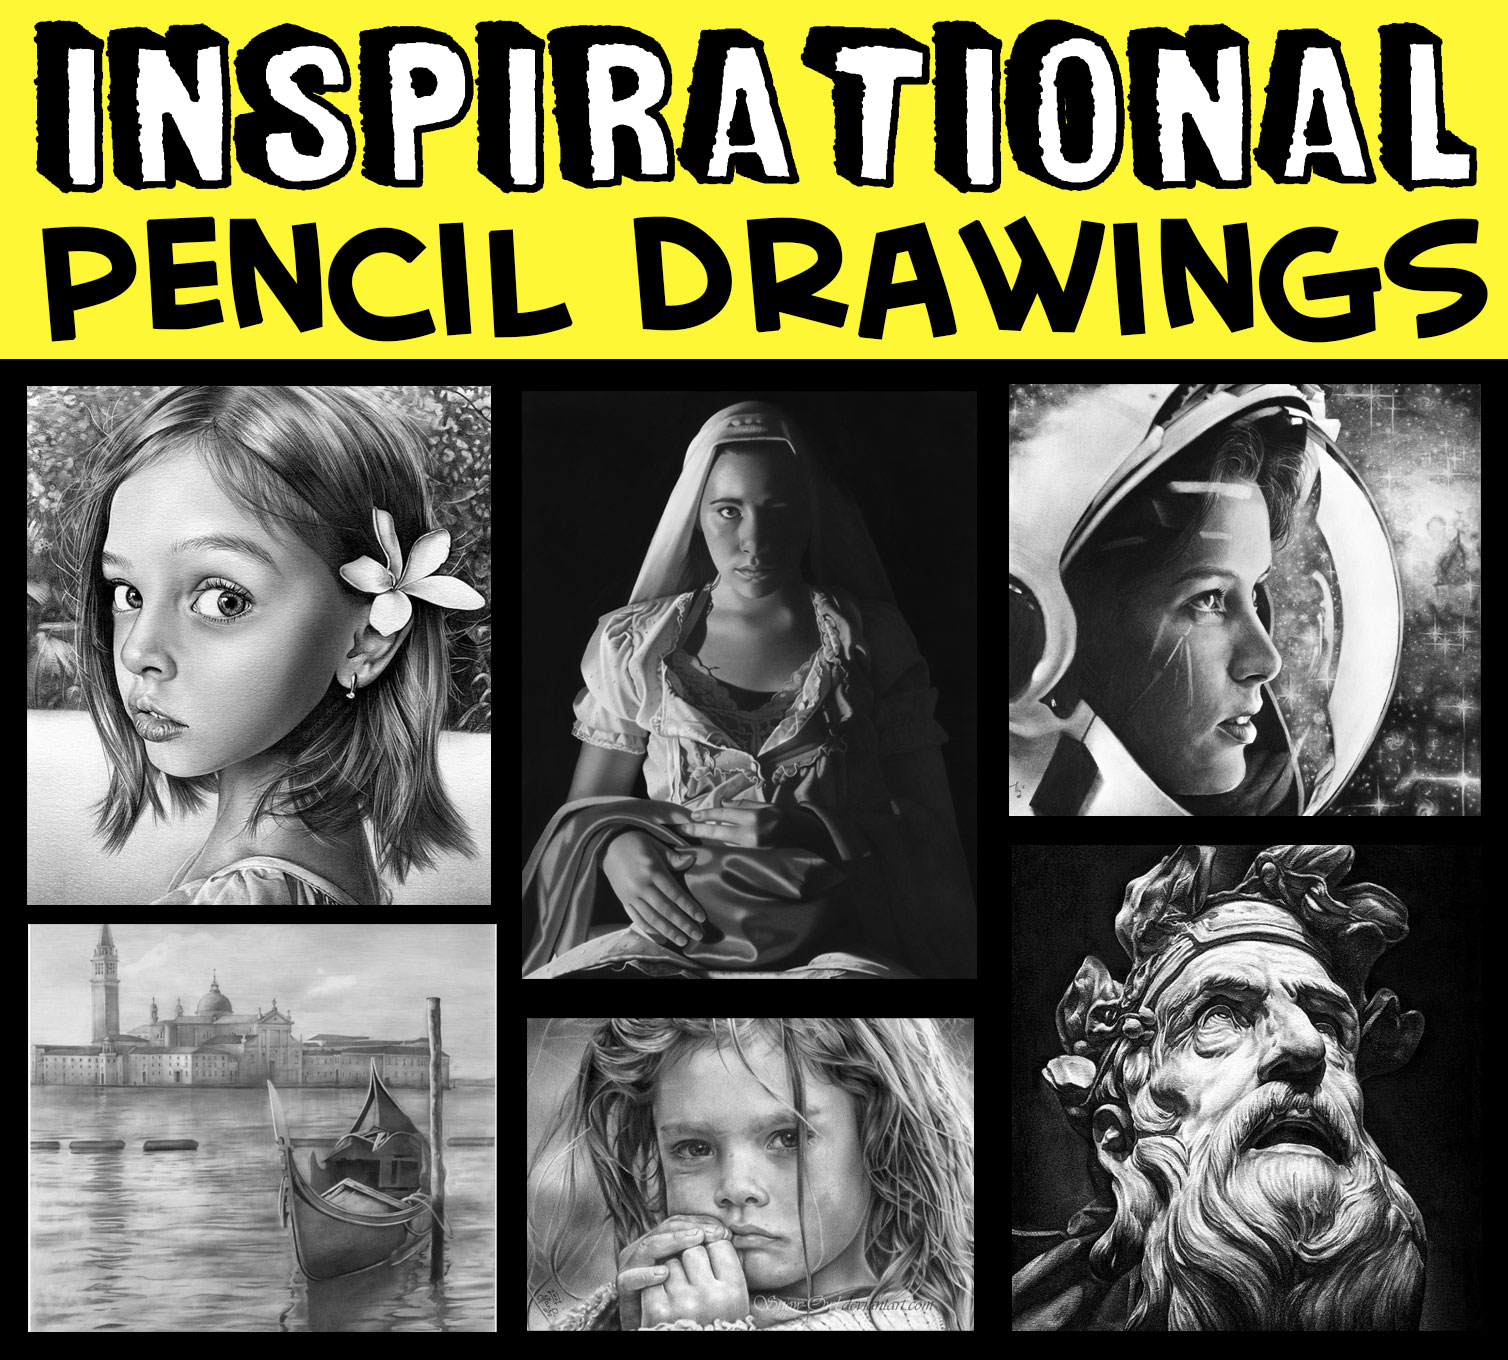 Art design | Pencil drawings easy, Figure drawing, Face drawing